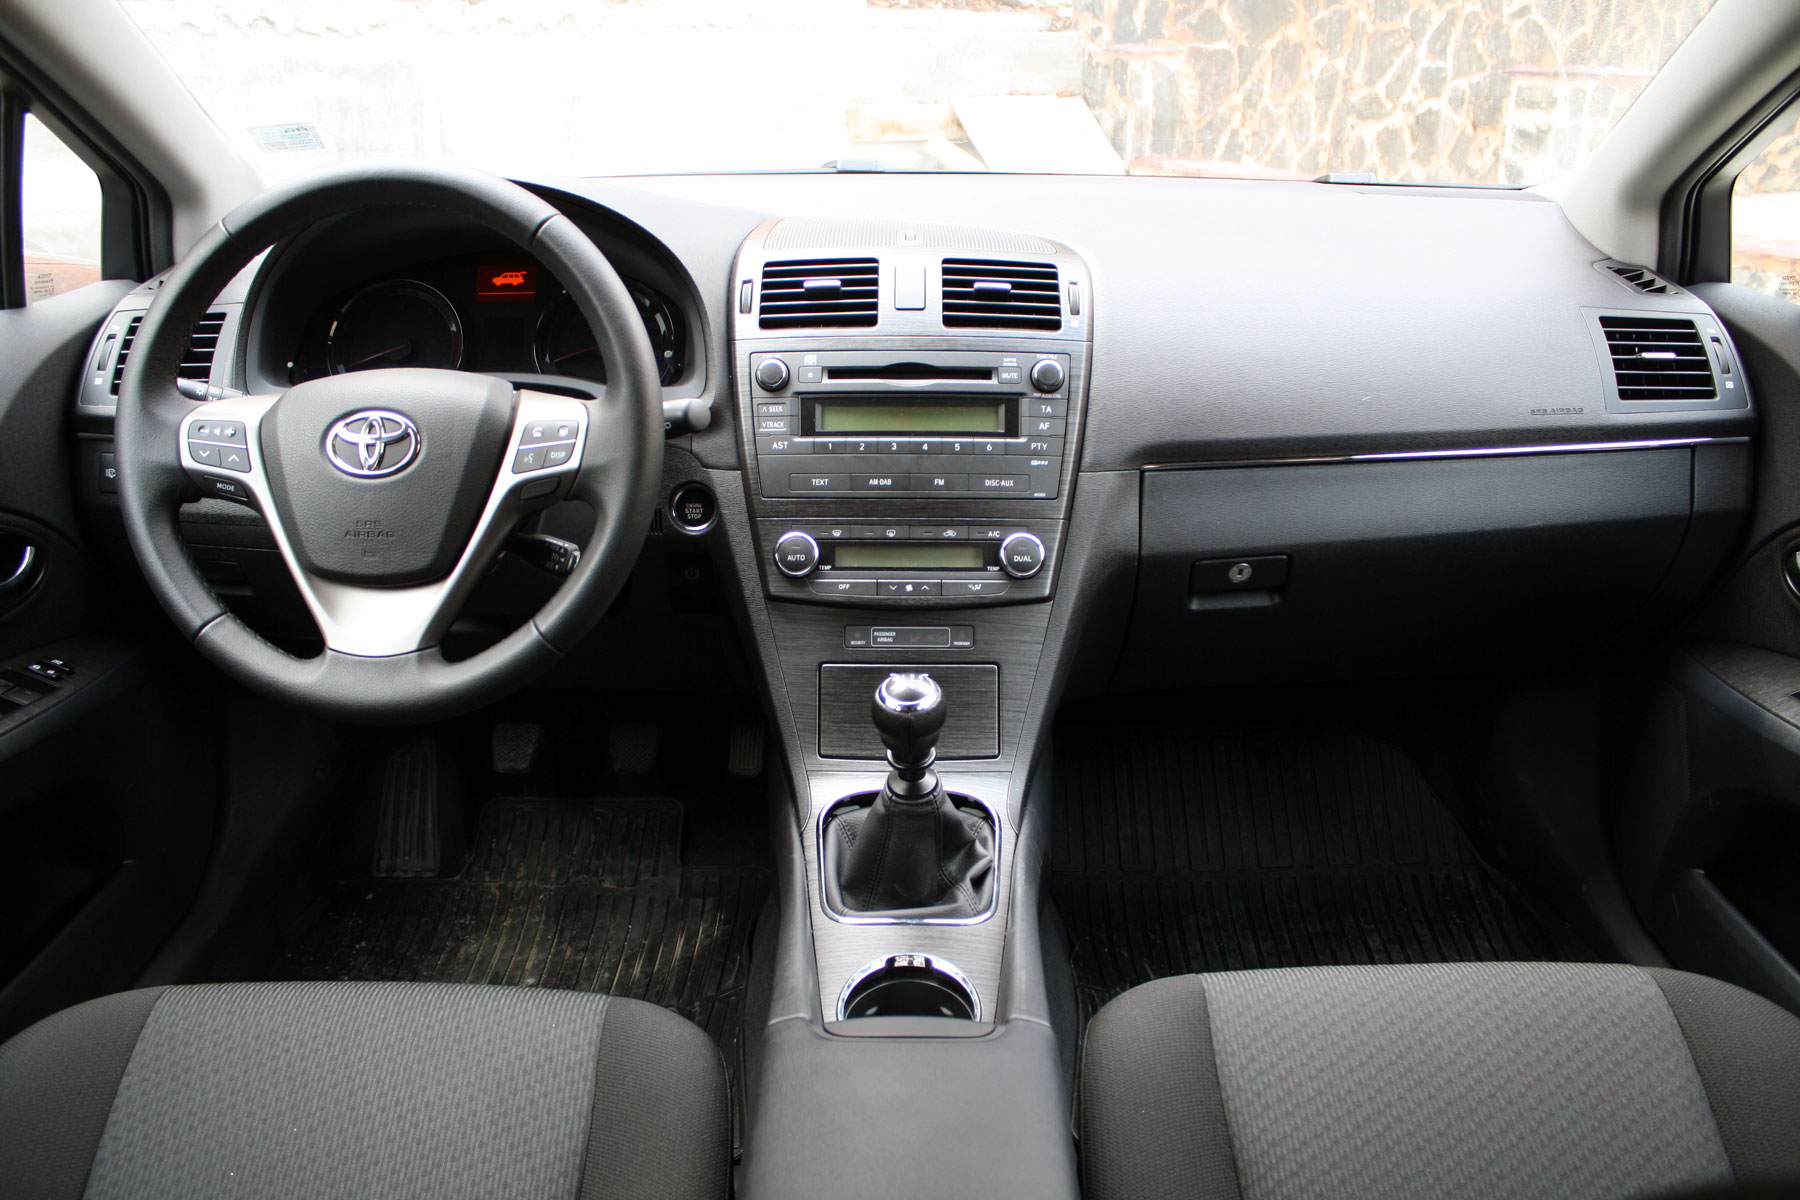 Toyota Avensis - interior